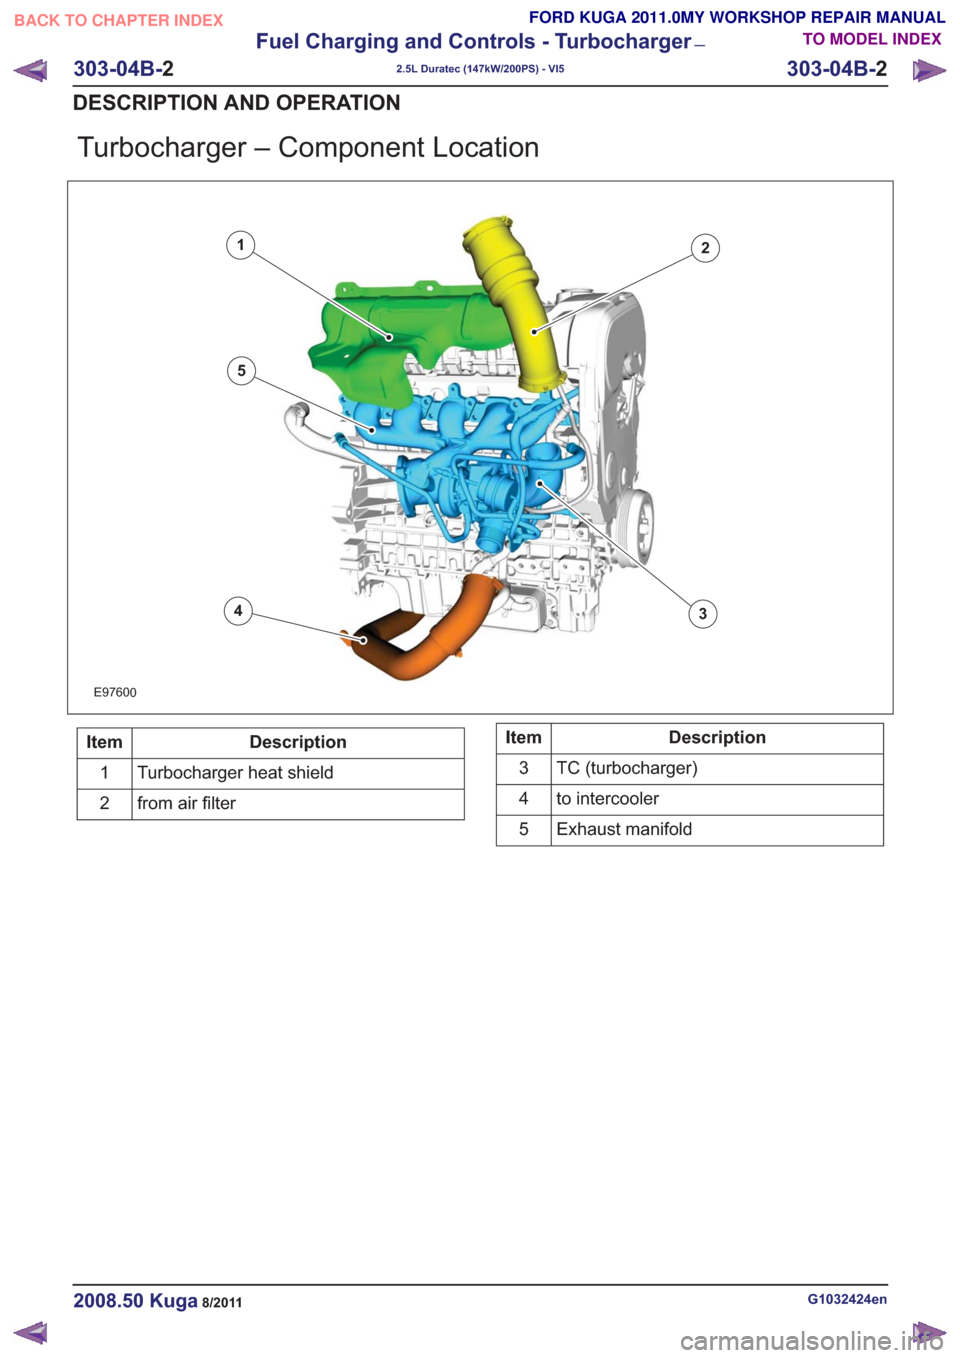 FORD KUGA 2011 1.G Workshop Manual Turbocharger – Component Location
E97600
12
34
5
Description
Item
Turbocharger heat shield
1
from air filter
2Description
Item
TC (turbocharger)
3
to intercooler
4
Exhaust manifold
5
G1032424en2008.